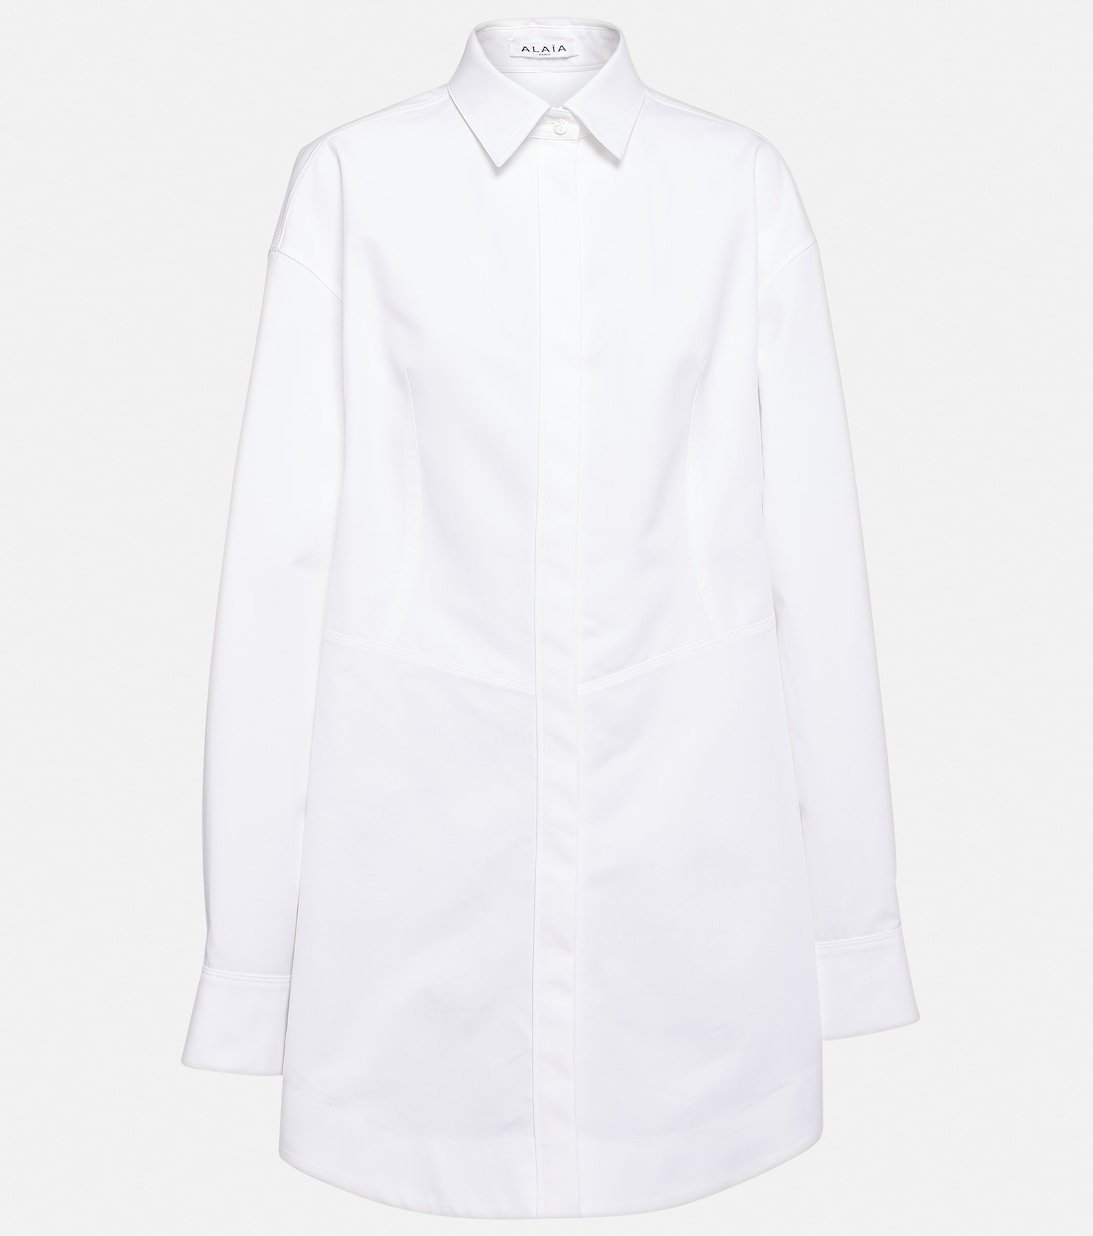 Alaia Ladies White Japanese Poplin Corset Shirt, Brand Size 36 (US